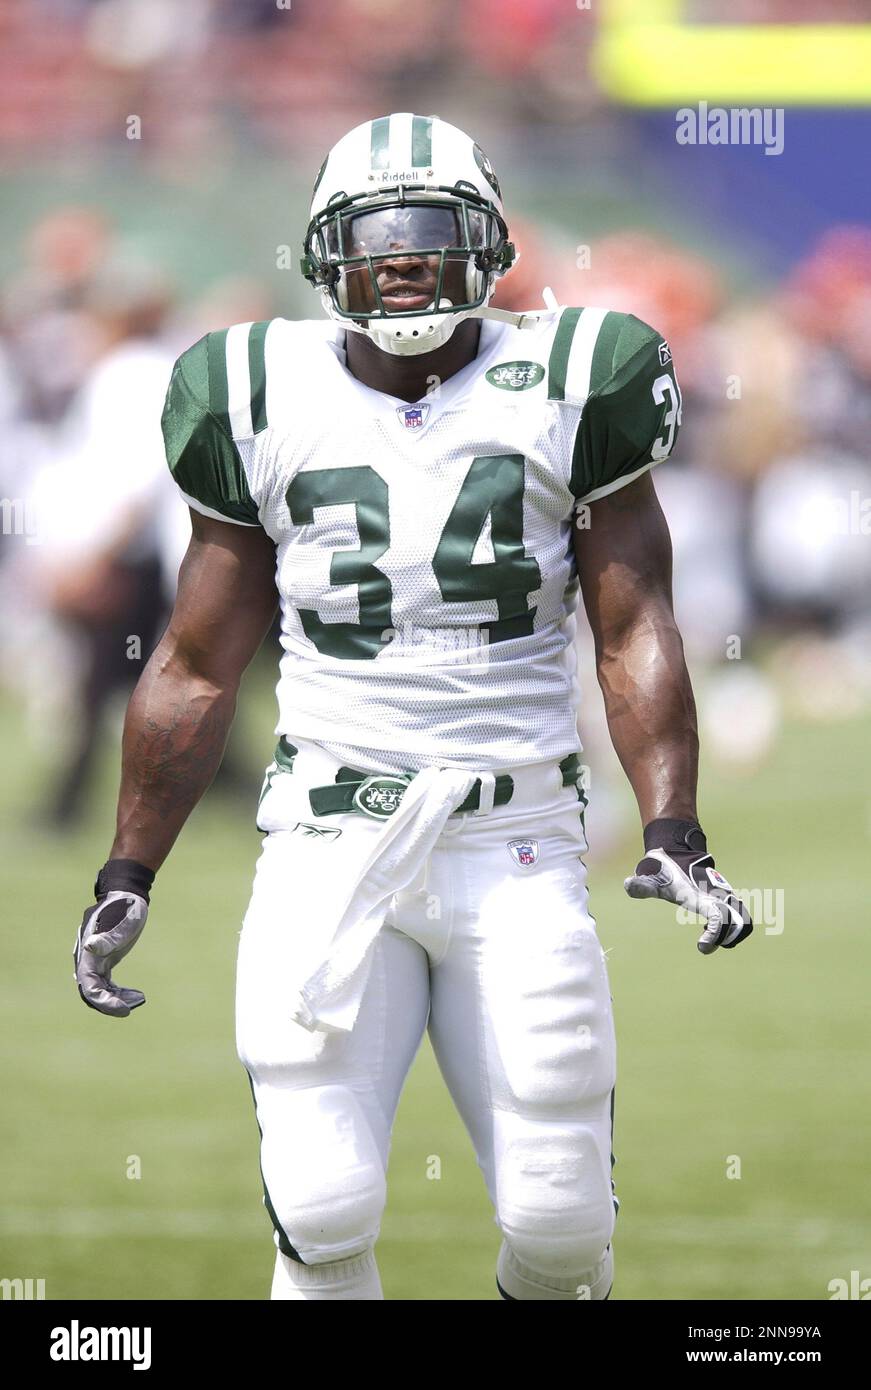 10 August 2003: LaMont Jordan of the New York Jets during the Jets 28-13  preseason